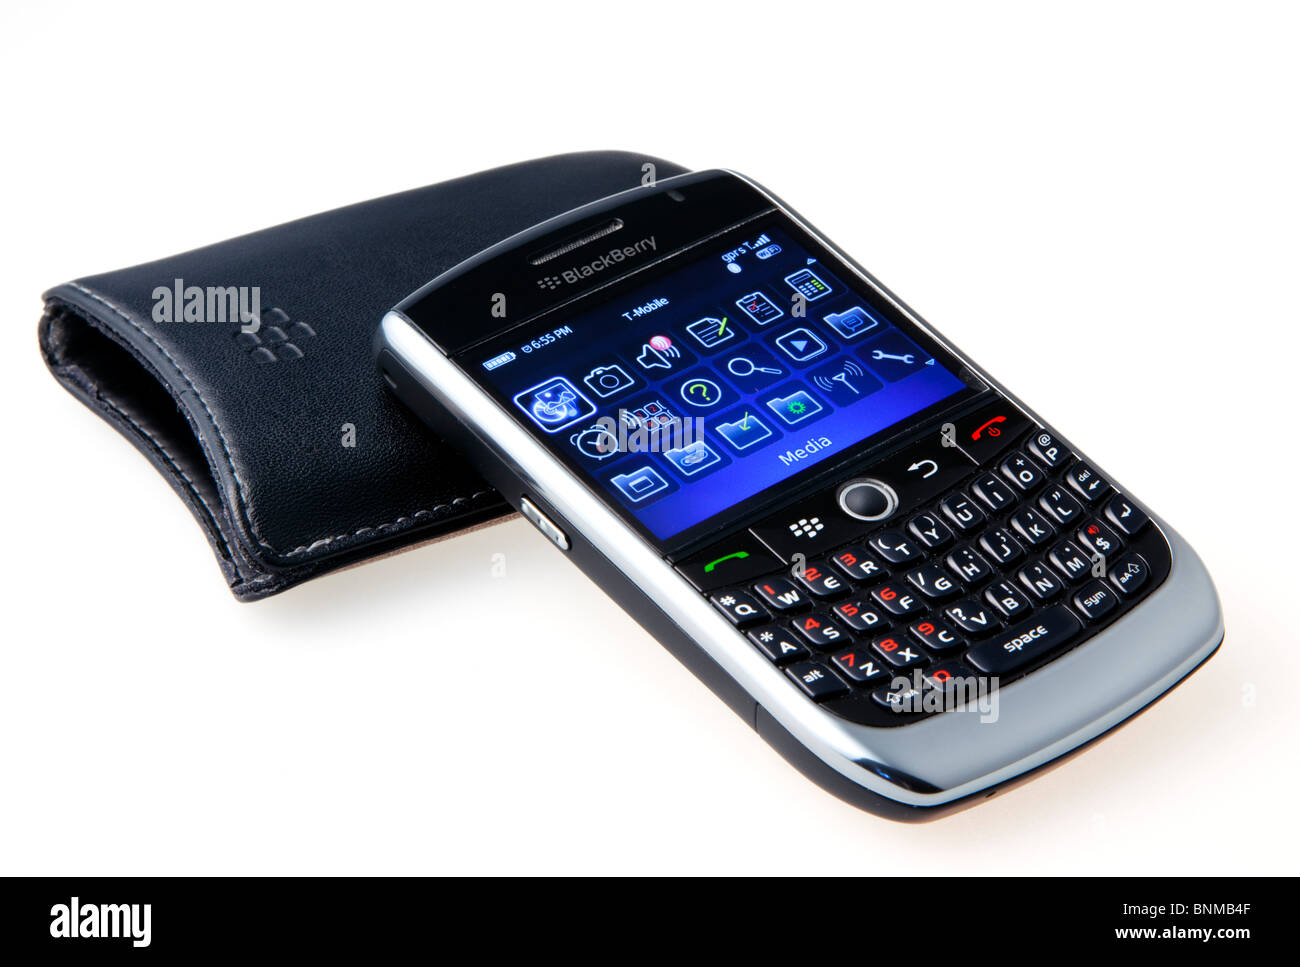 Communications, Telephone, Mobile, Blackberry Curve 8900 Smart Phone. Stock Photo